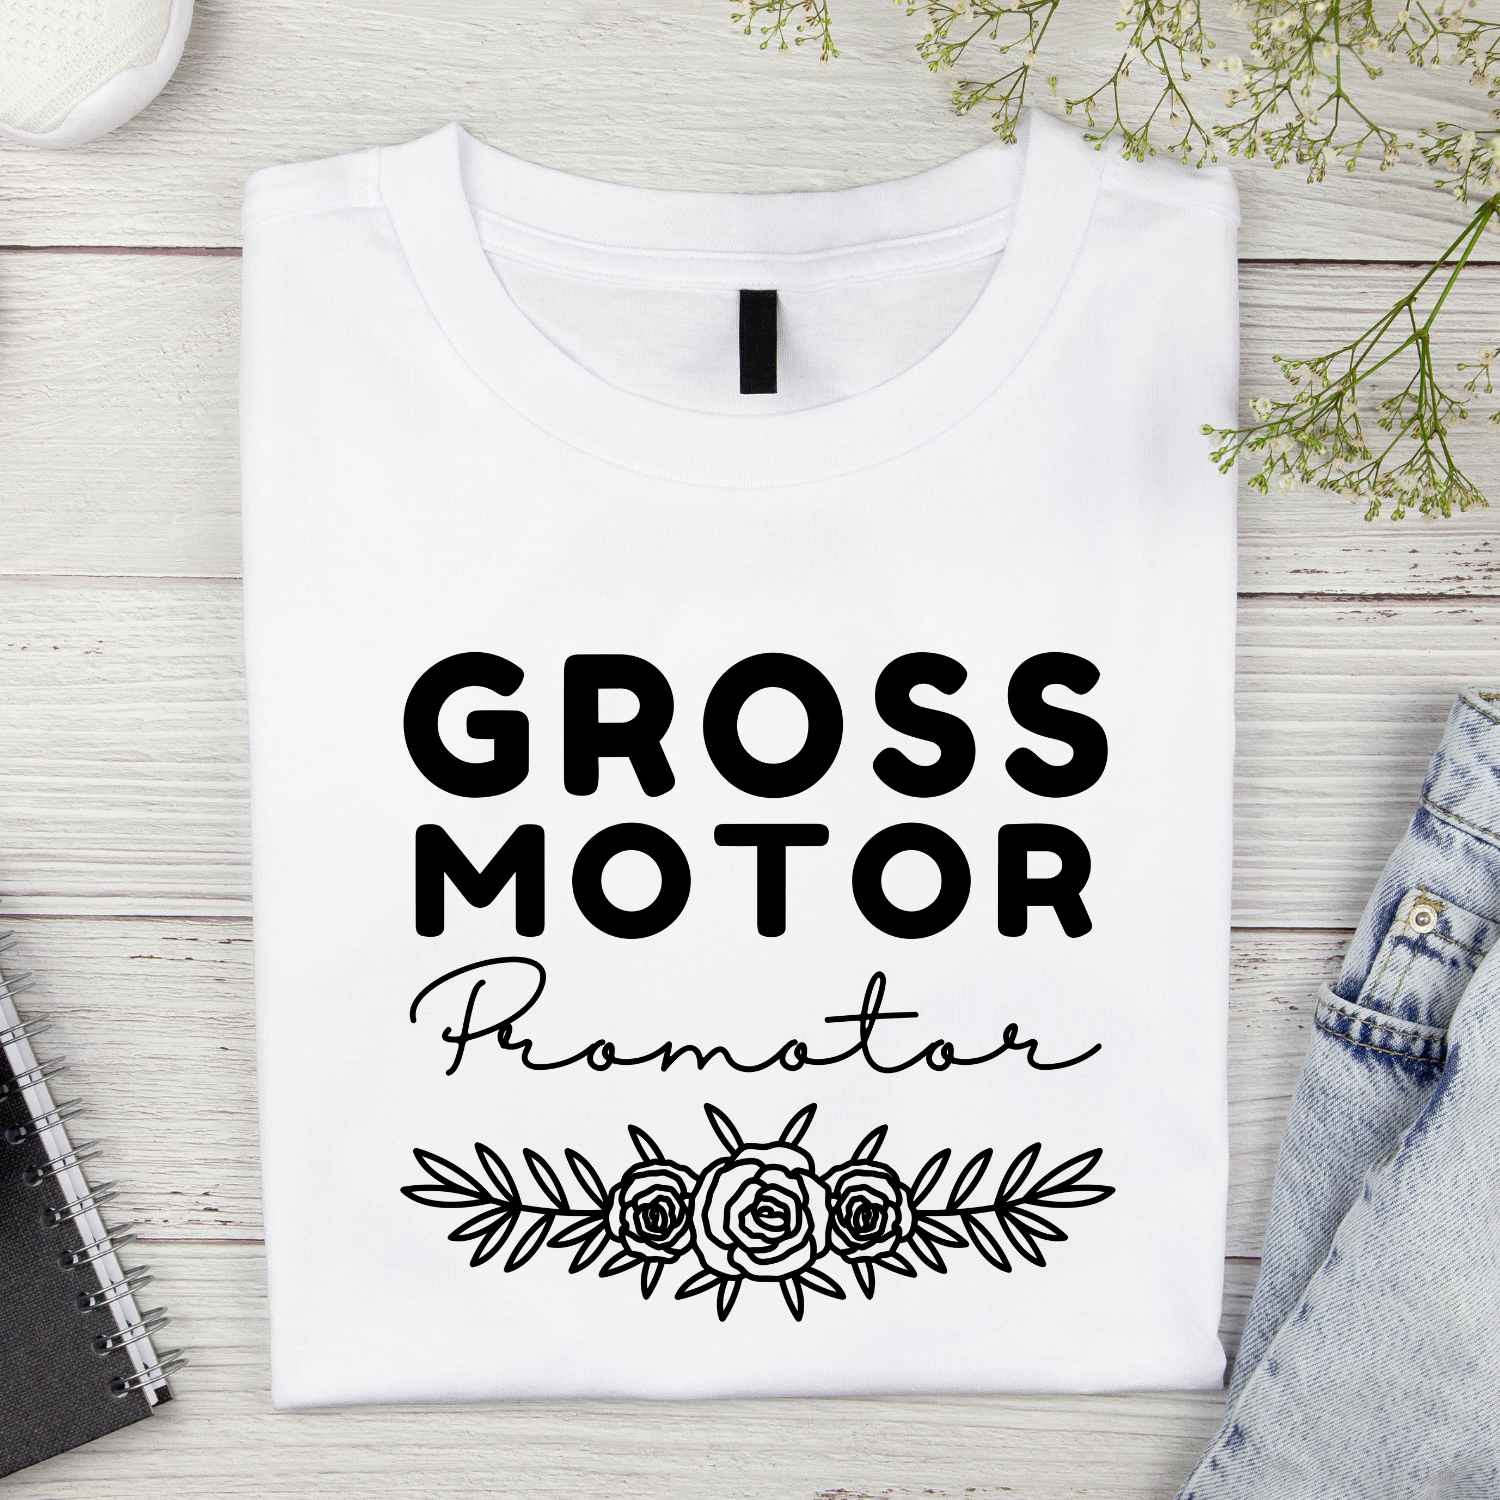 Gross Motor Promotor T-shirt Design